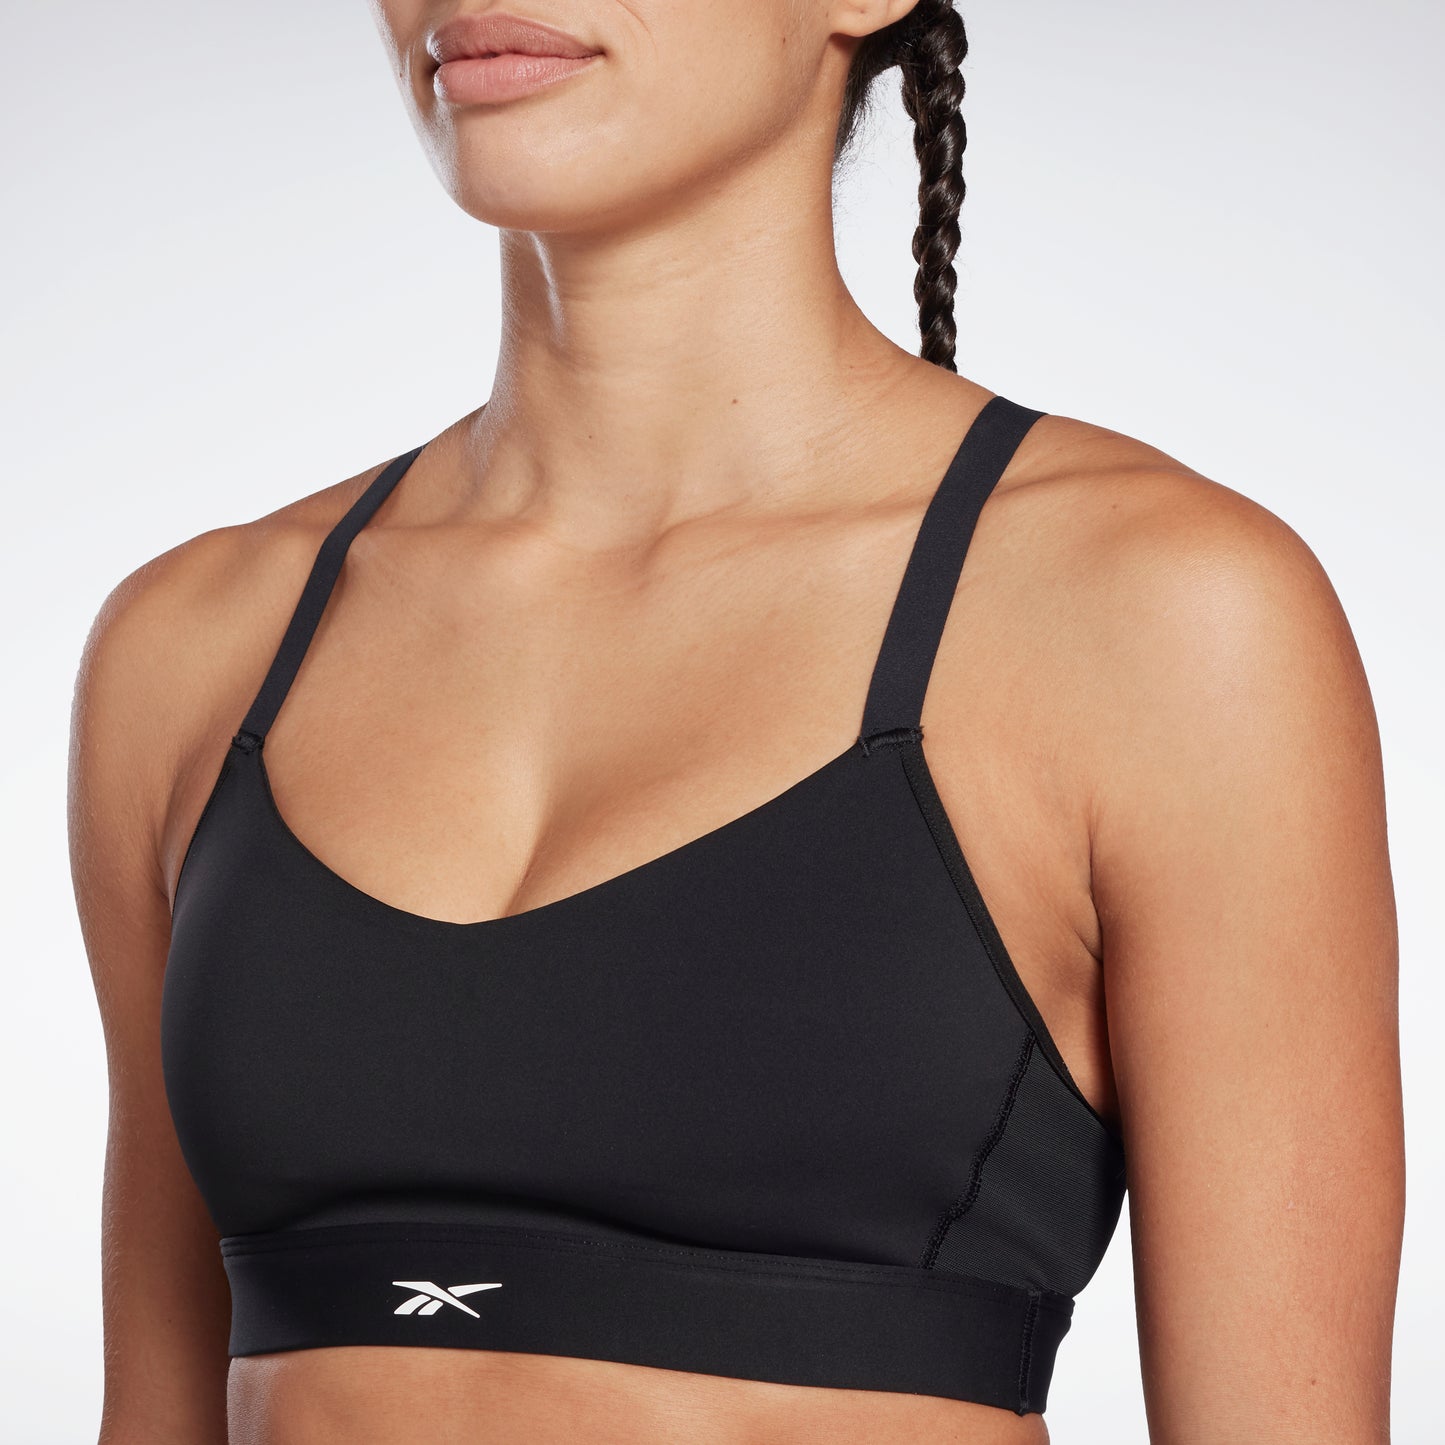 Buy RBX women 2 piece textured padded sports bra black brown